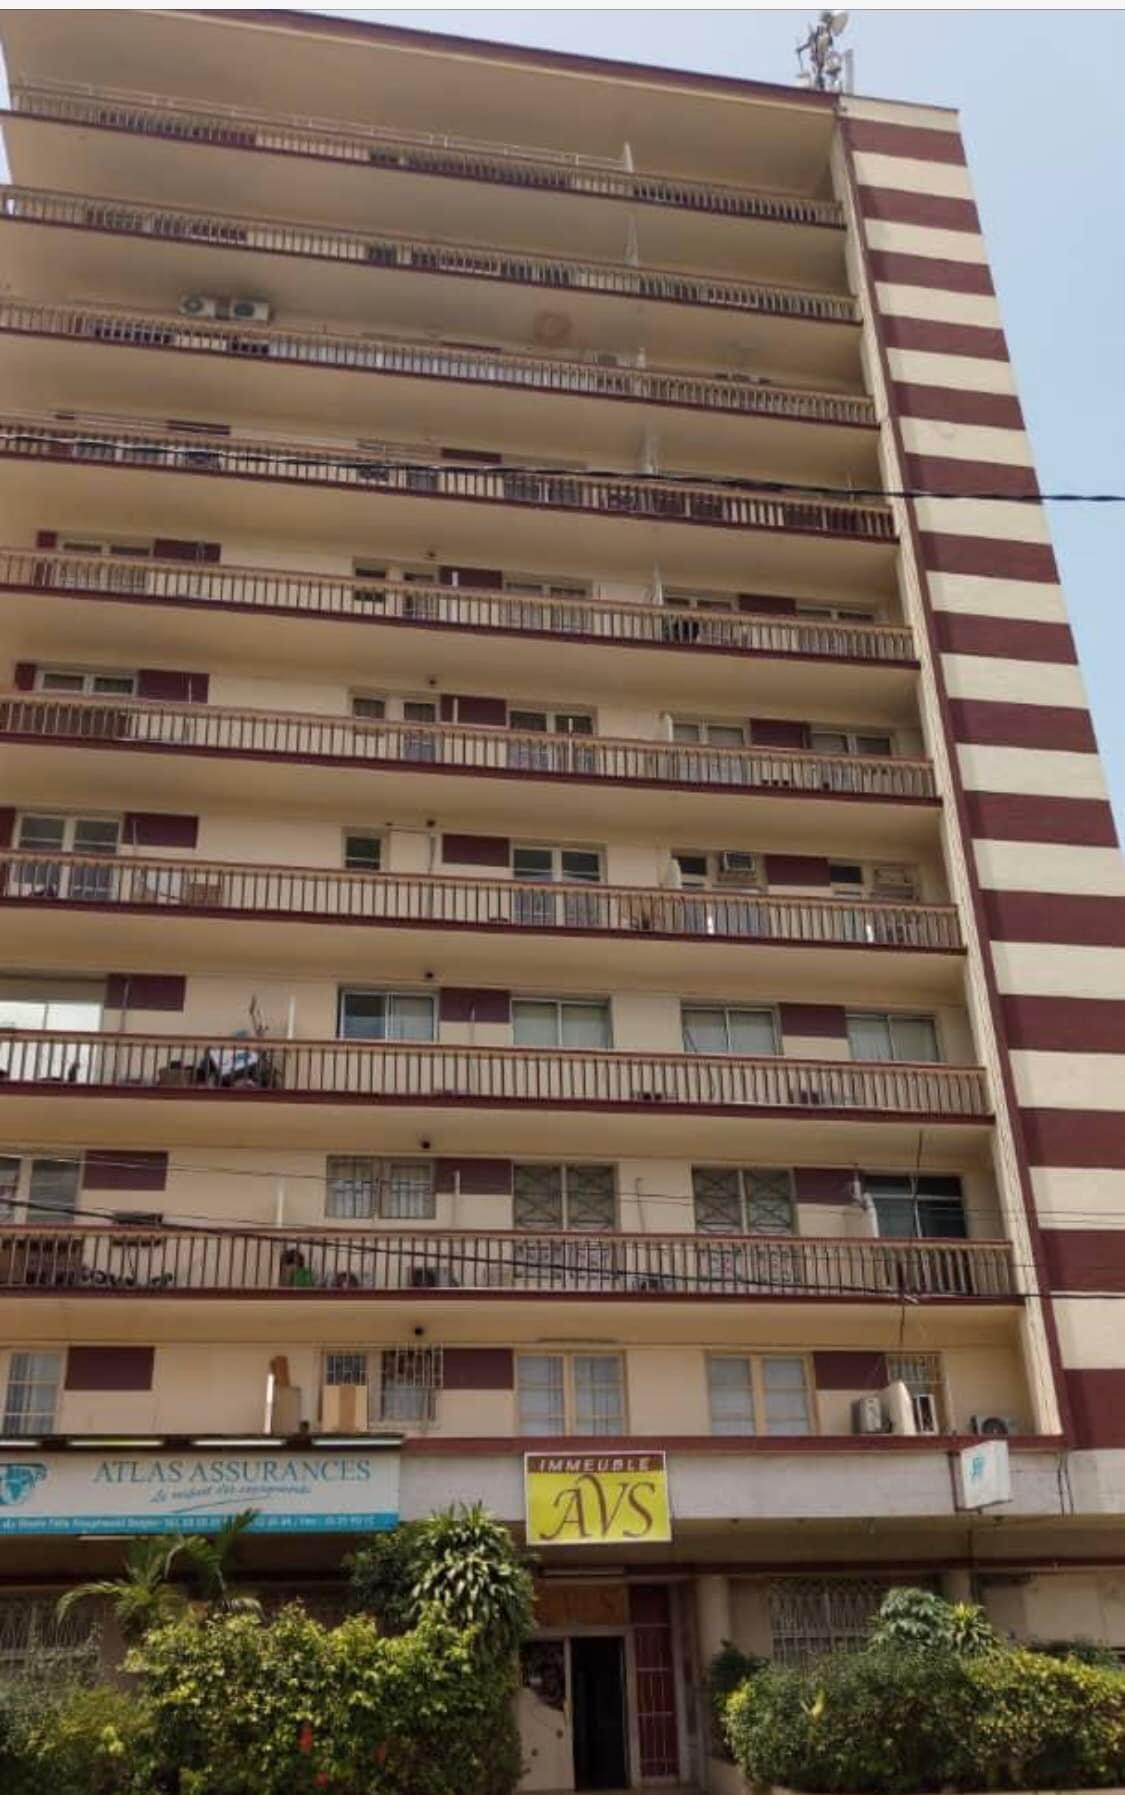 Vente d'un Immeuble à 14.000.000.000 FCFA  : Abidjan-Plateau (Plateau )